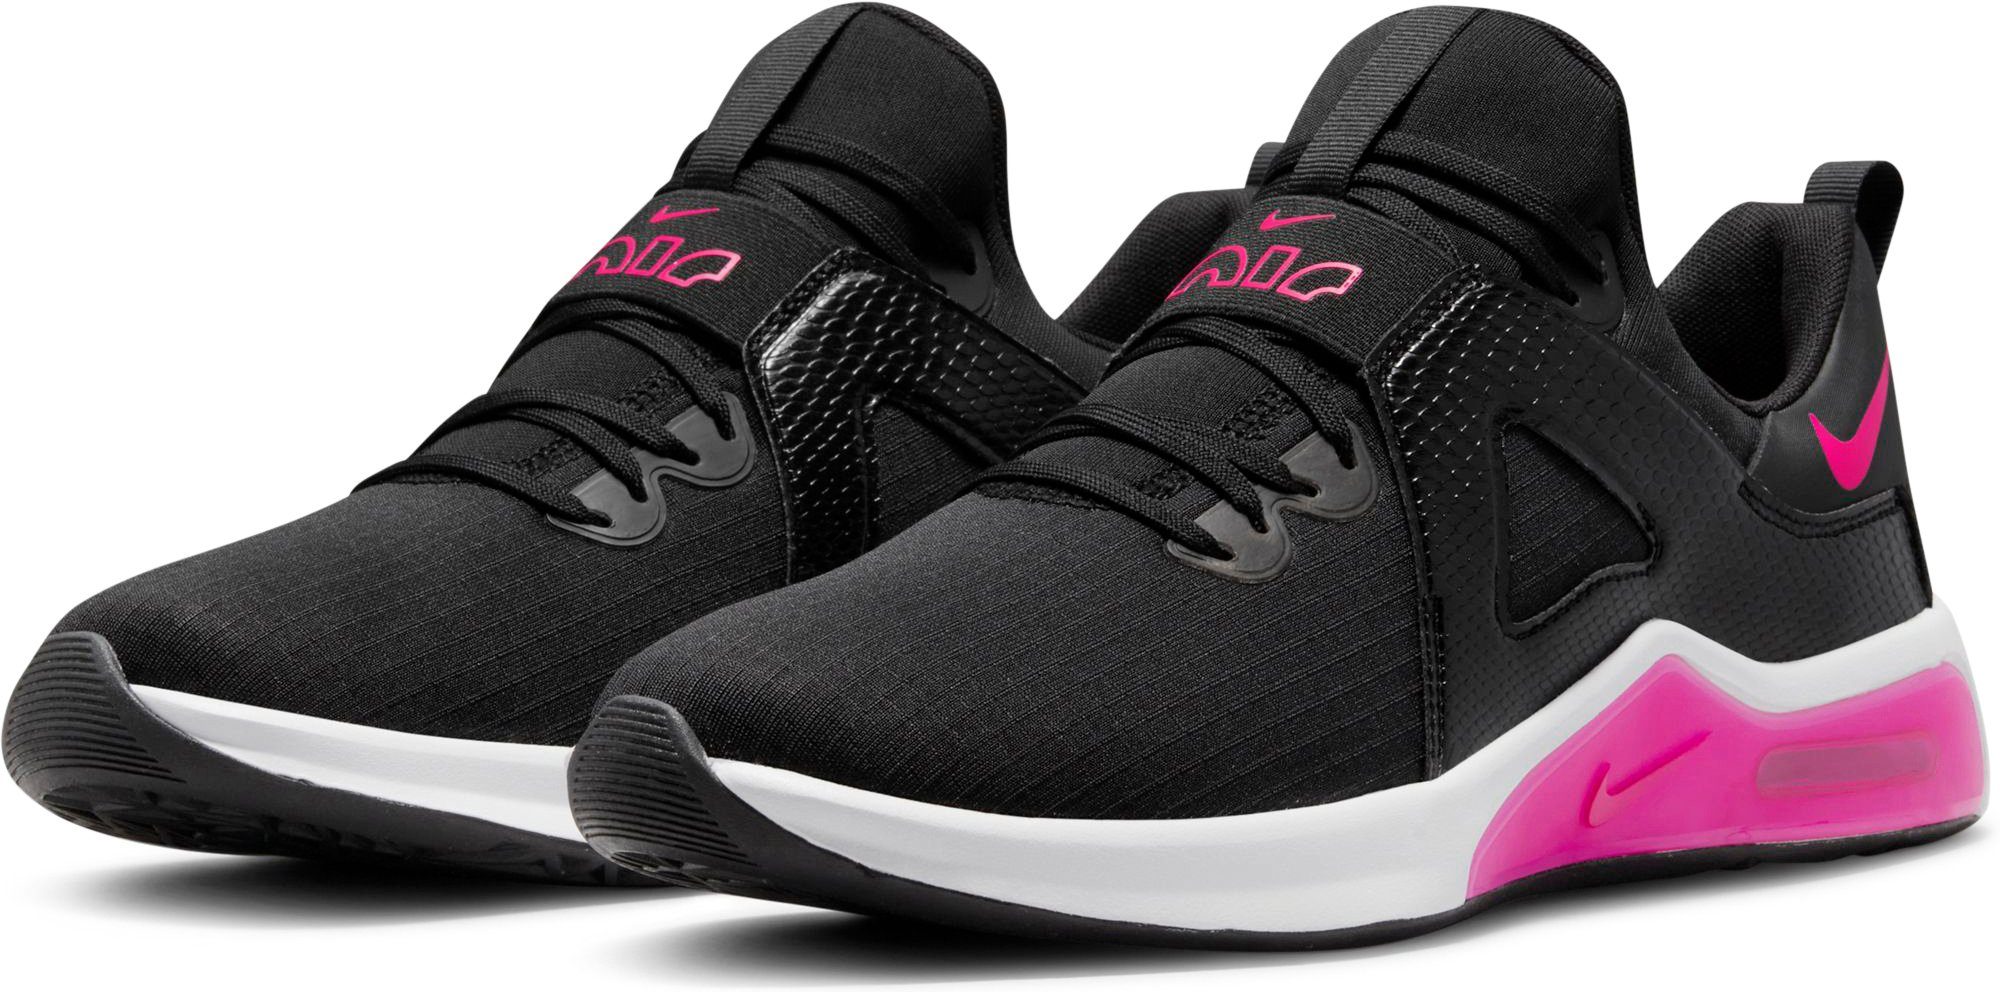 AIR Fitnessschuh BELLA MAX Nike schwarz-pink 5 TR